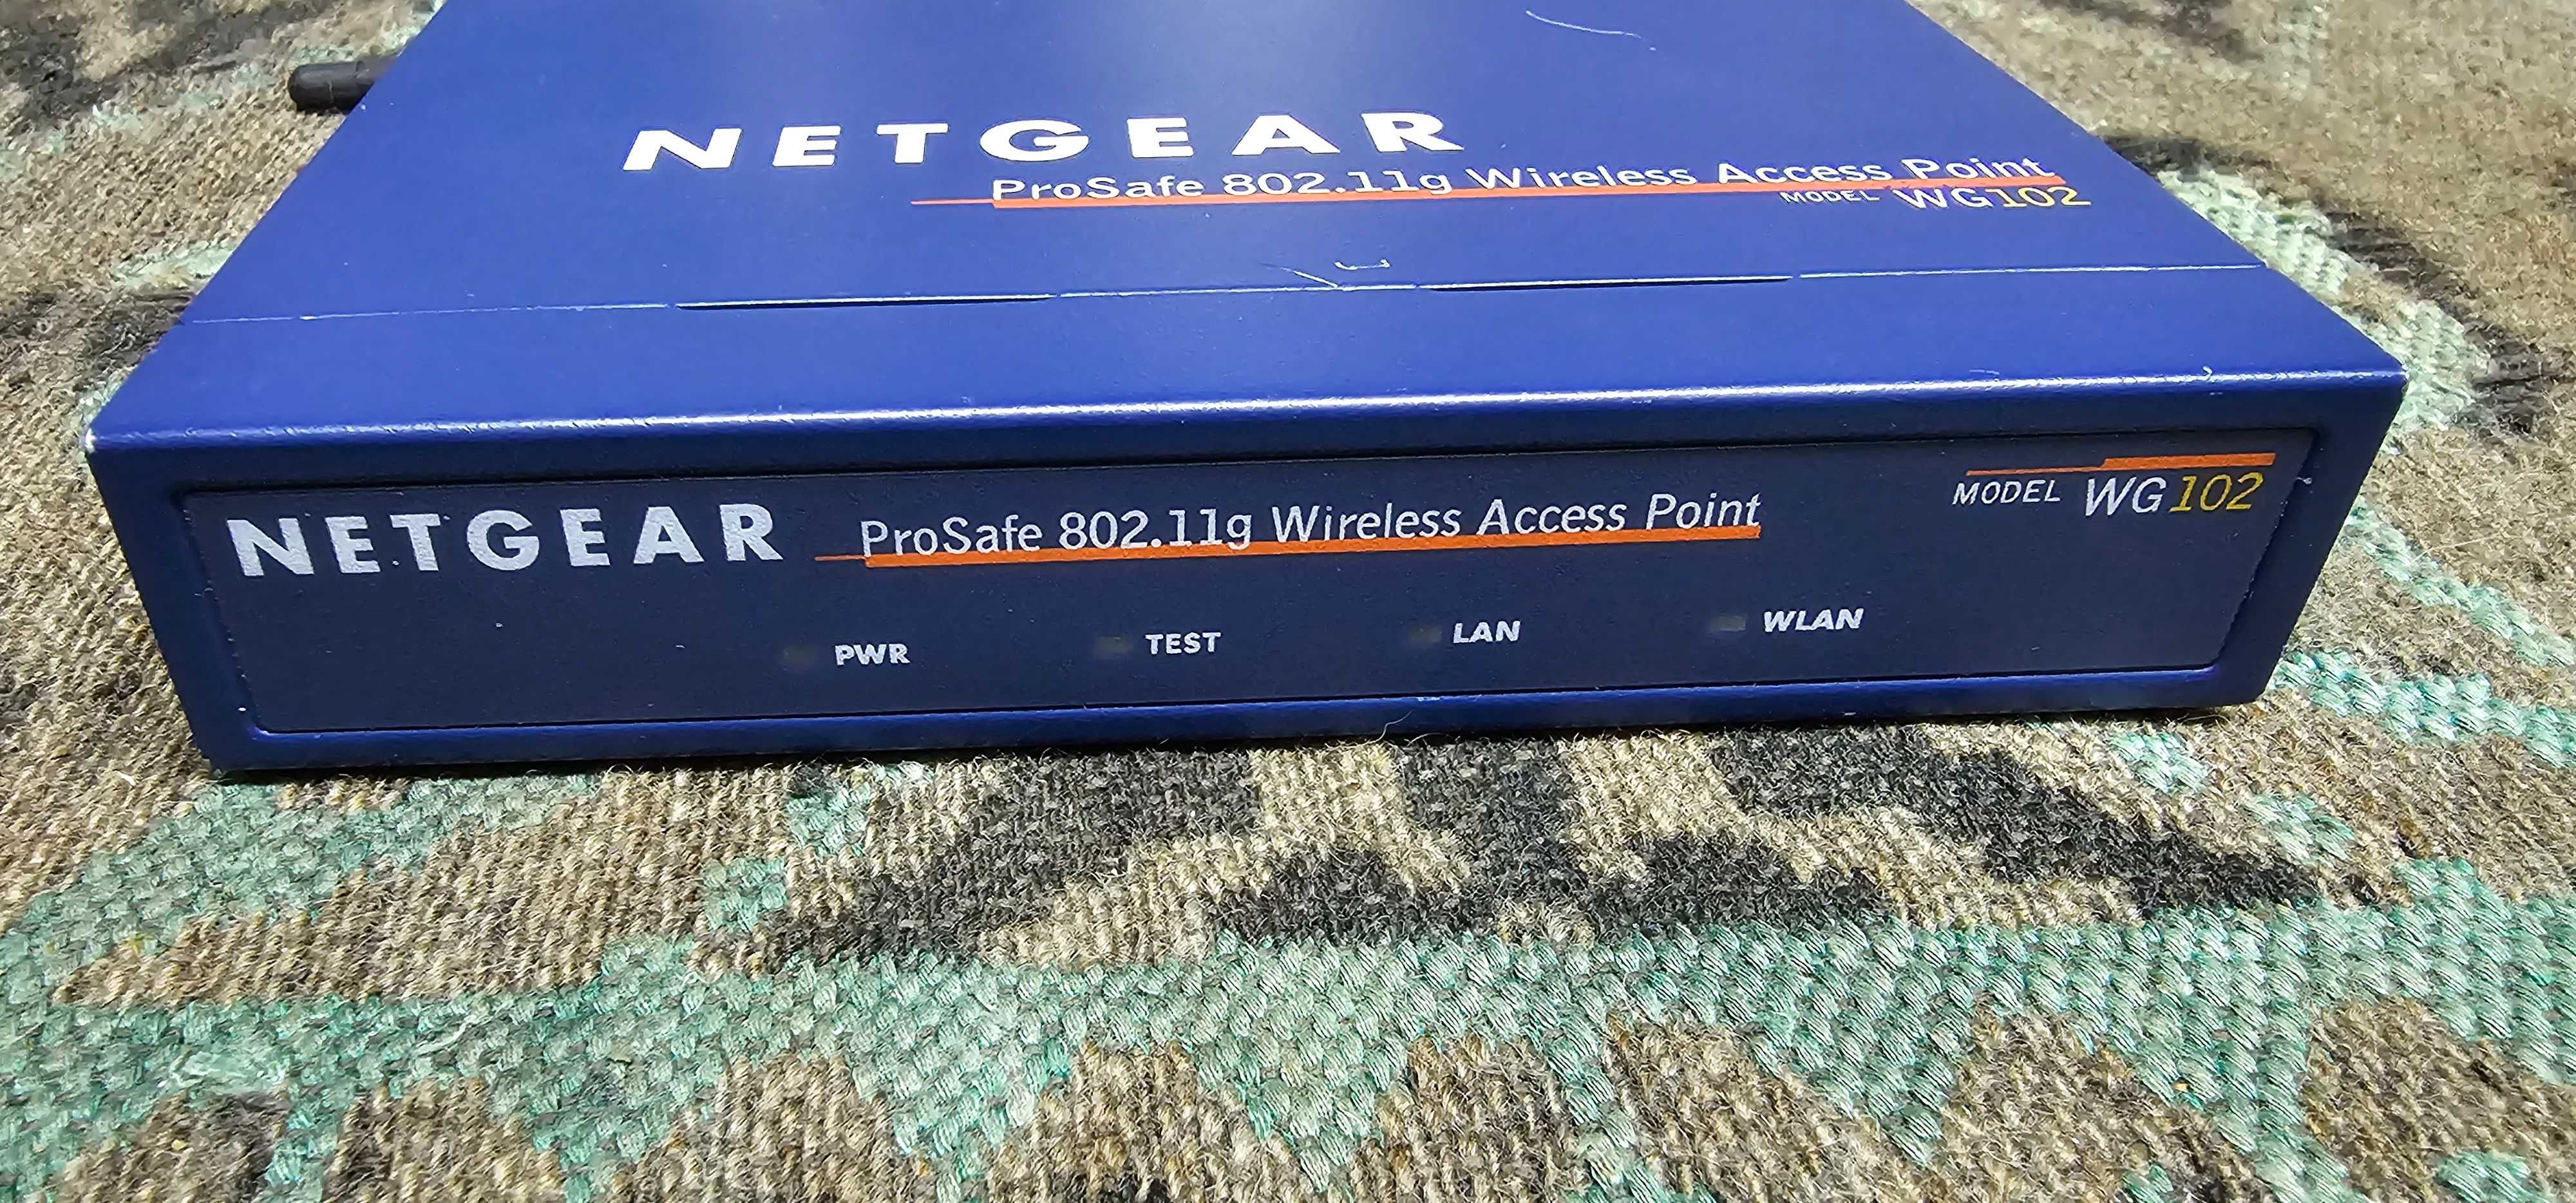 NETGEAR FVS318 ProSafe VPN Firewall + WG102 - ProSAFE AP